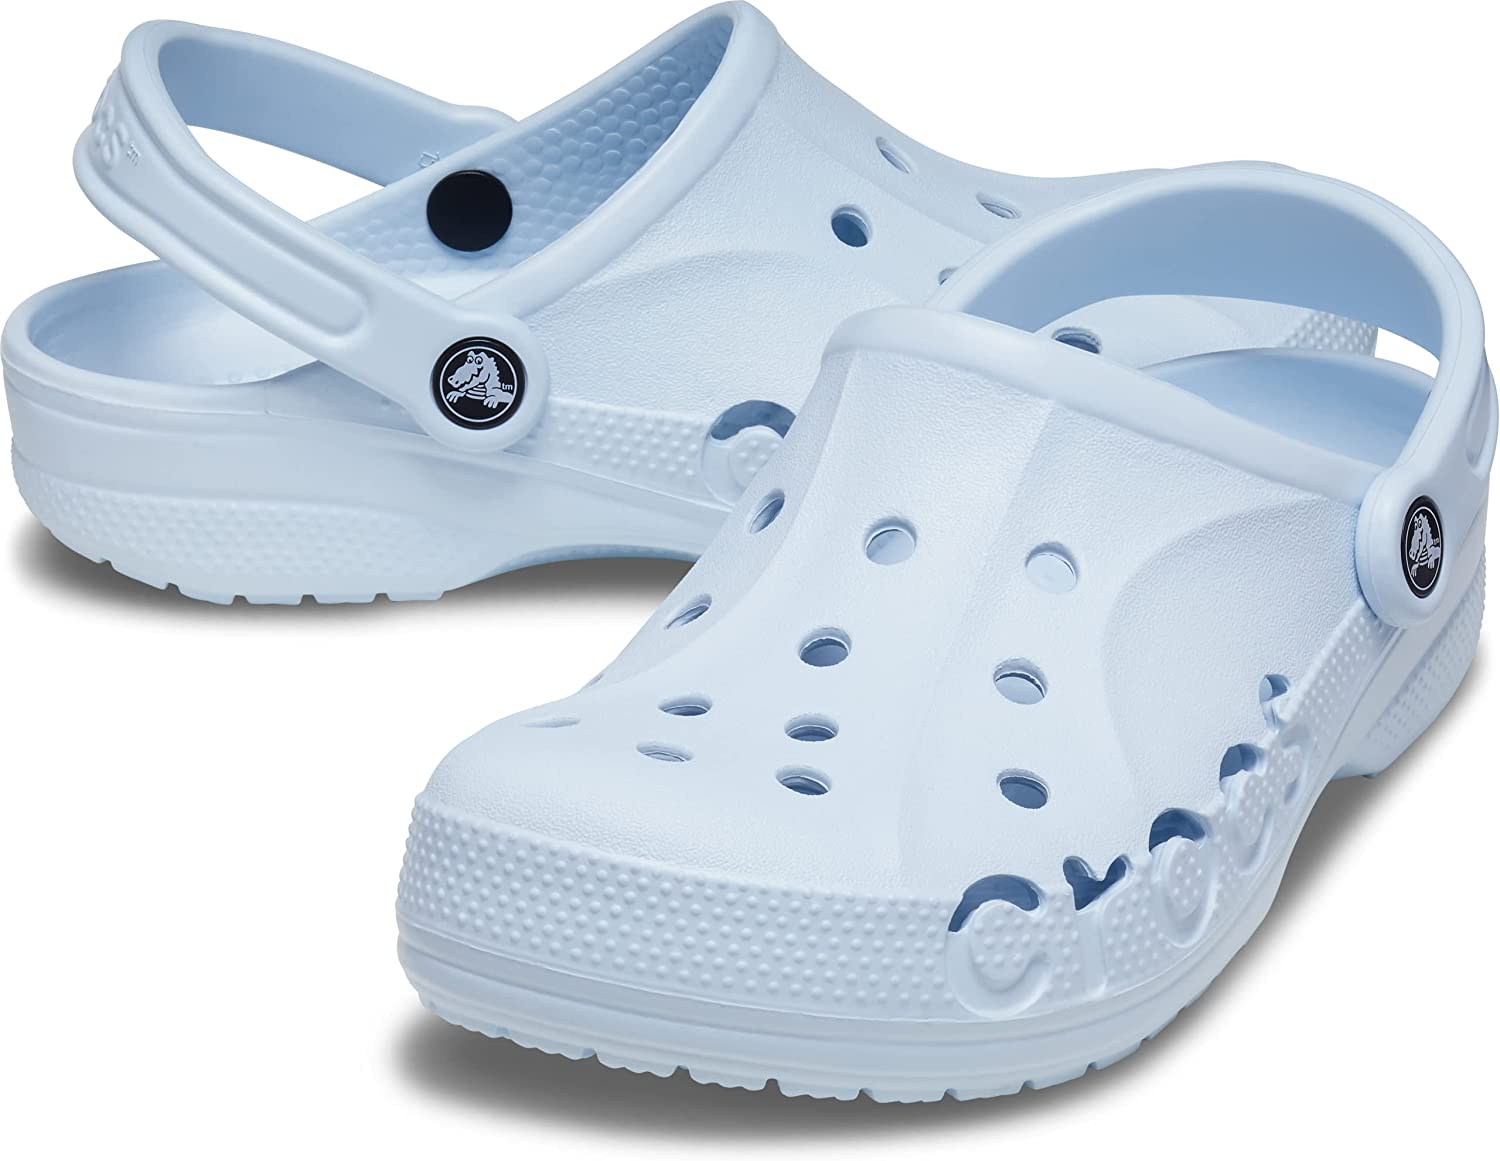 Crocs Unisex Baya Clog Sandals - image 4 of 8